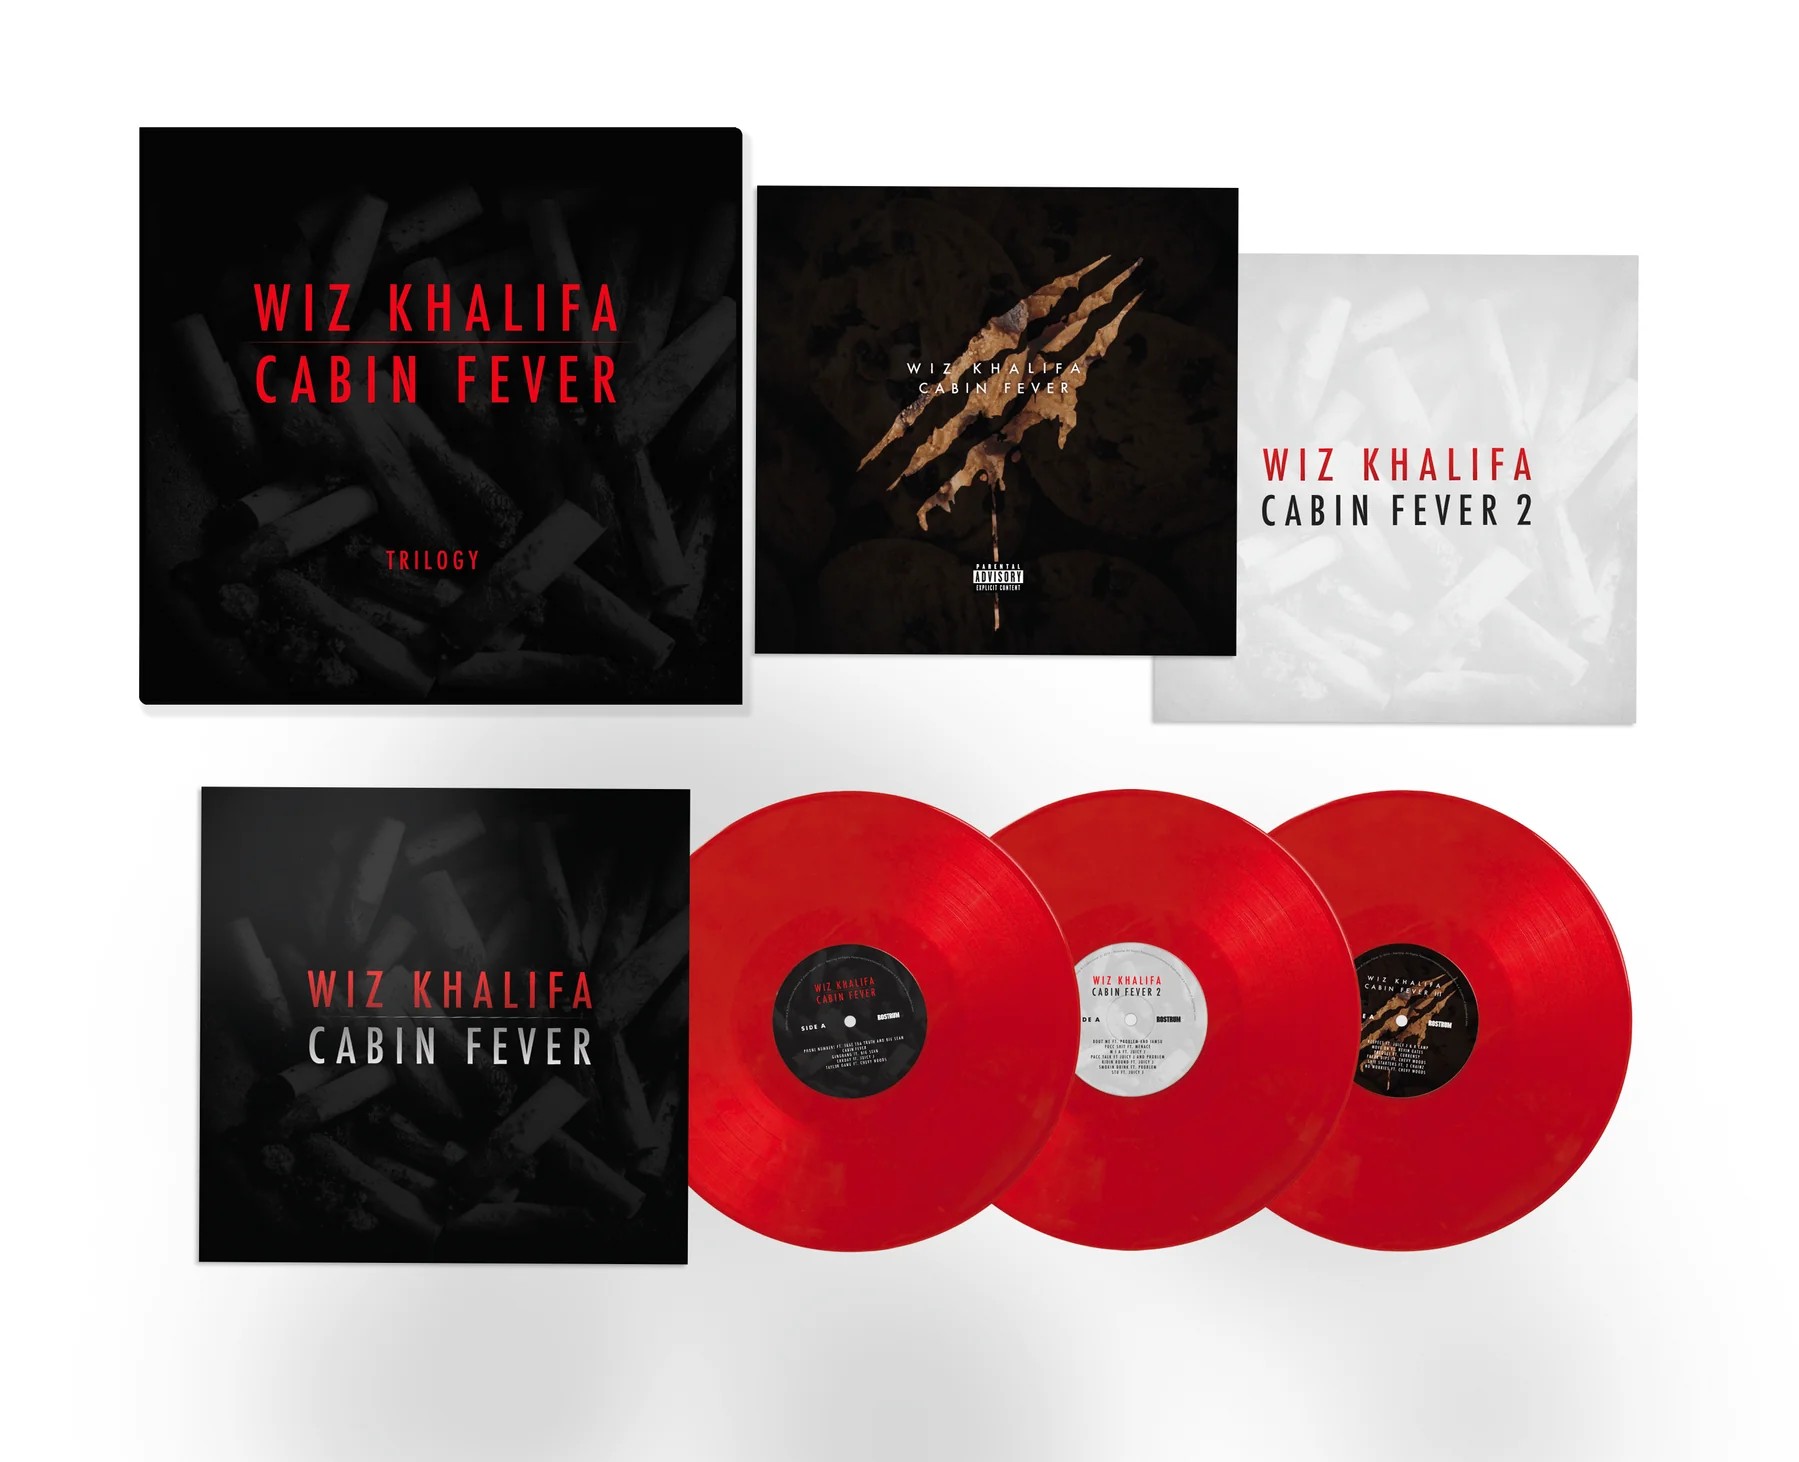 Wiz Khalifa 'Cabin Fever' Trilogy vinyl pack shot